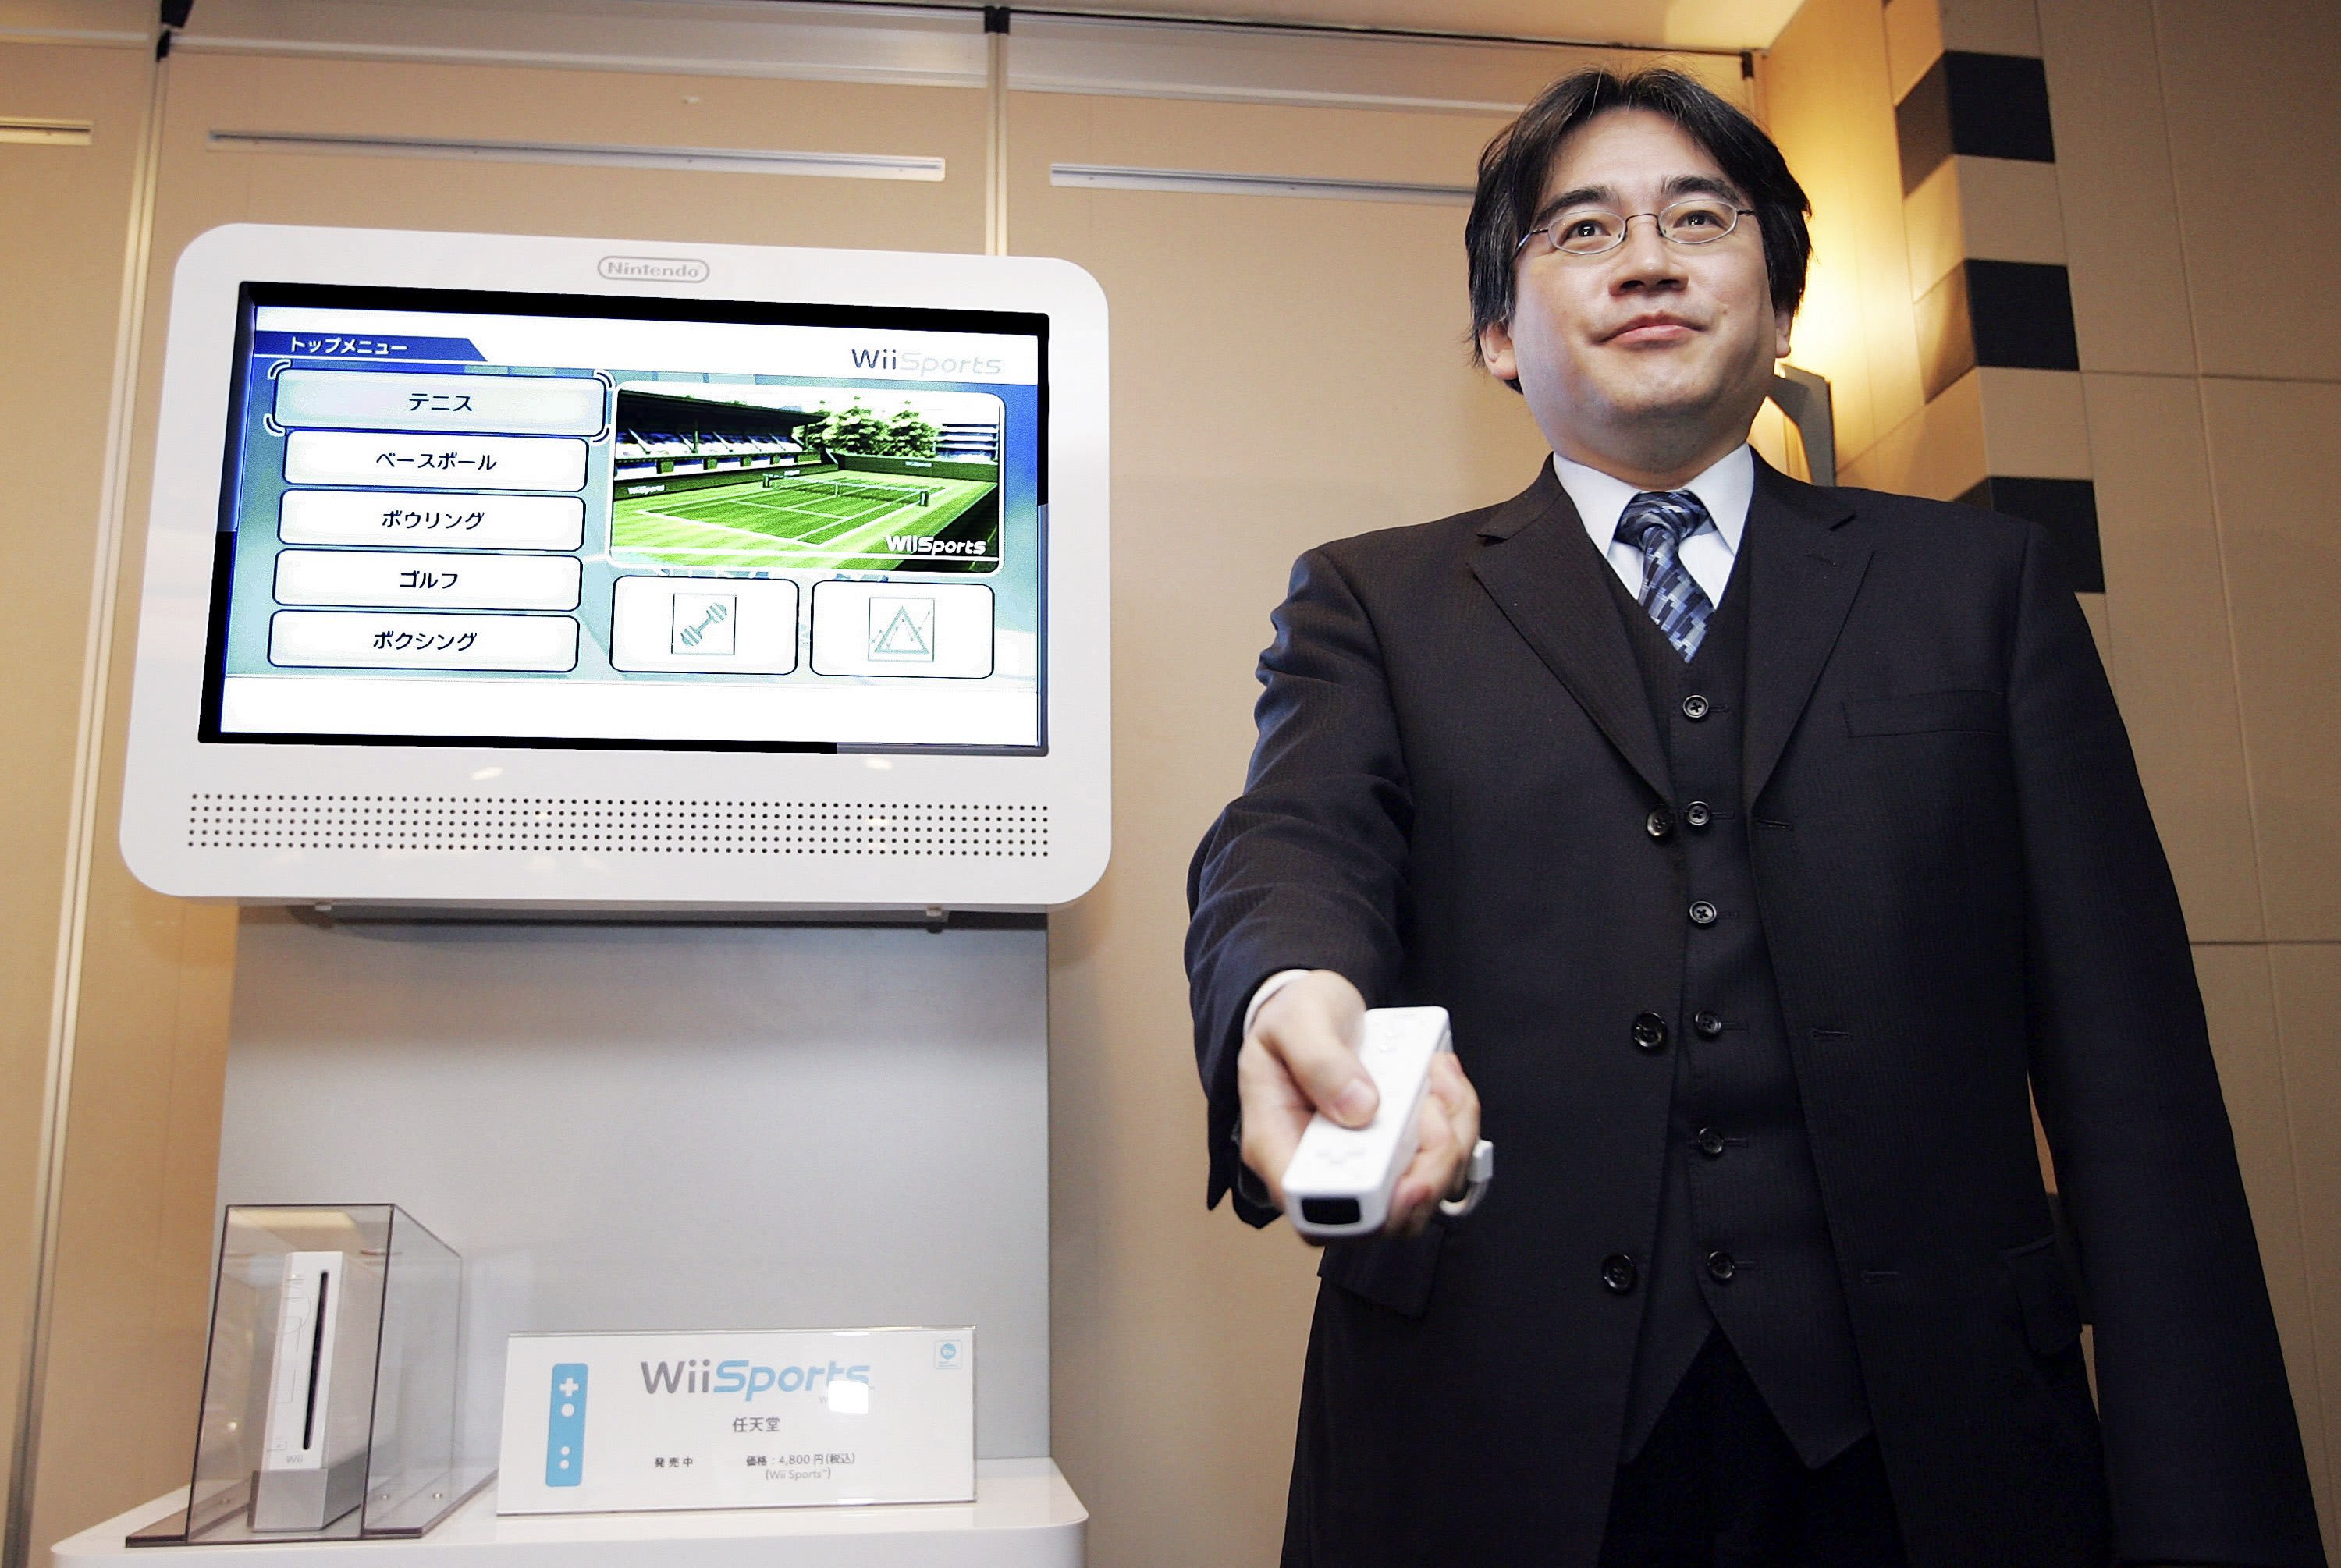 In memory of Satoru Iwata, Tokyo Tech alumnus and Nintendo